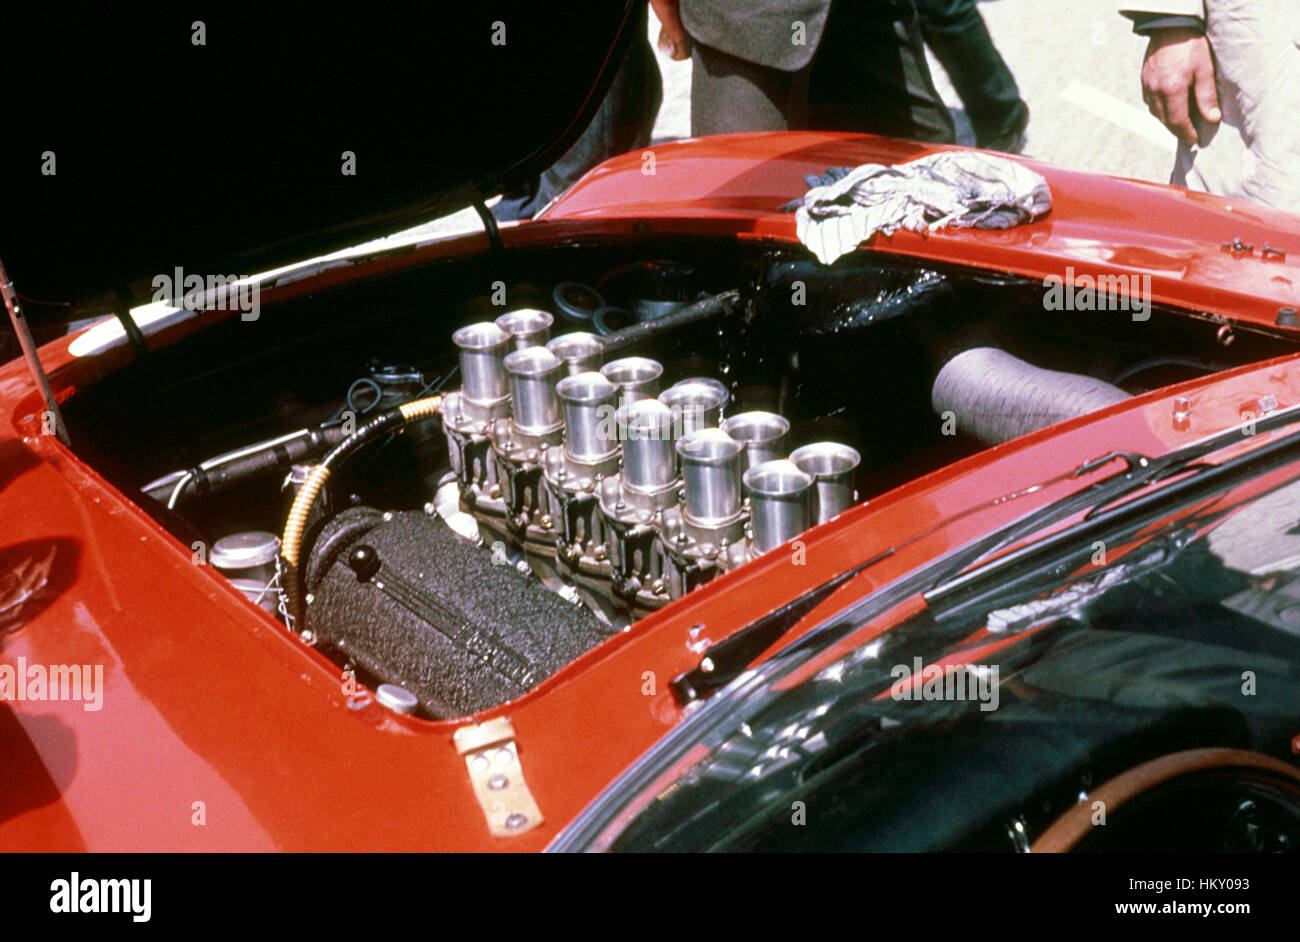 1963 Masten Gregory noi Ferrari 250LMB motore Le Mans 6 FL Foto Stock